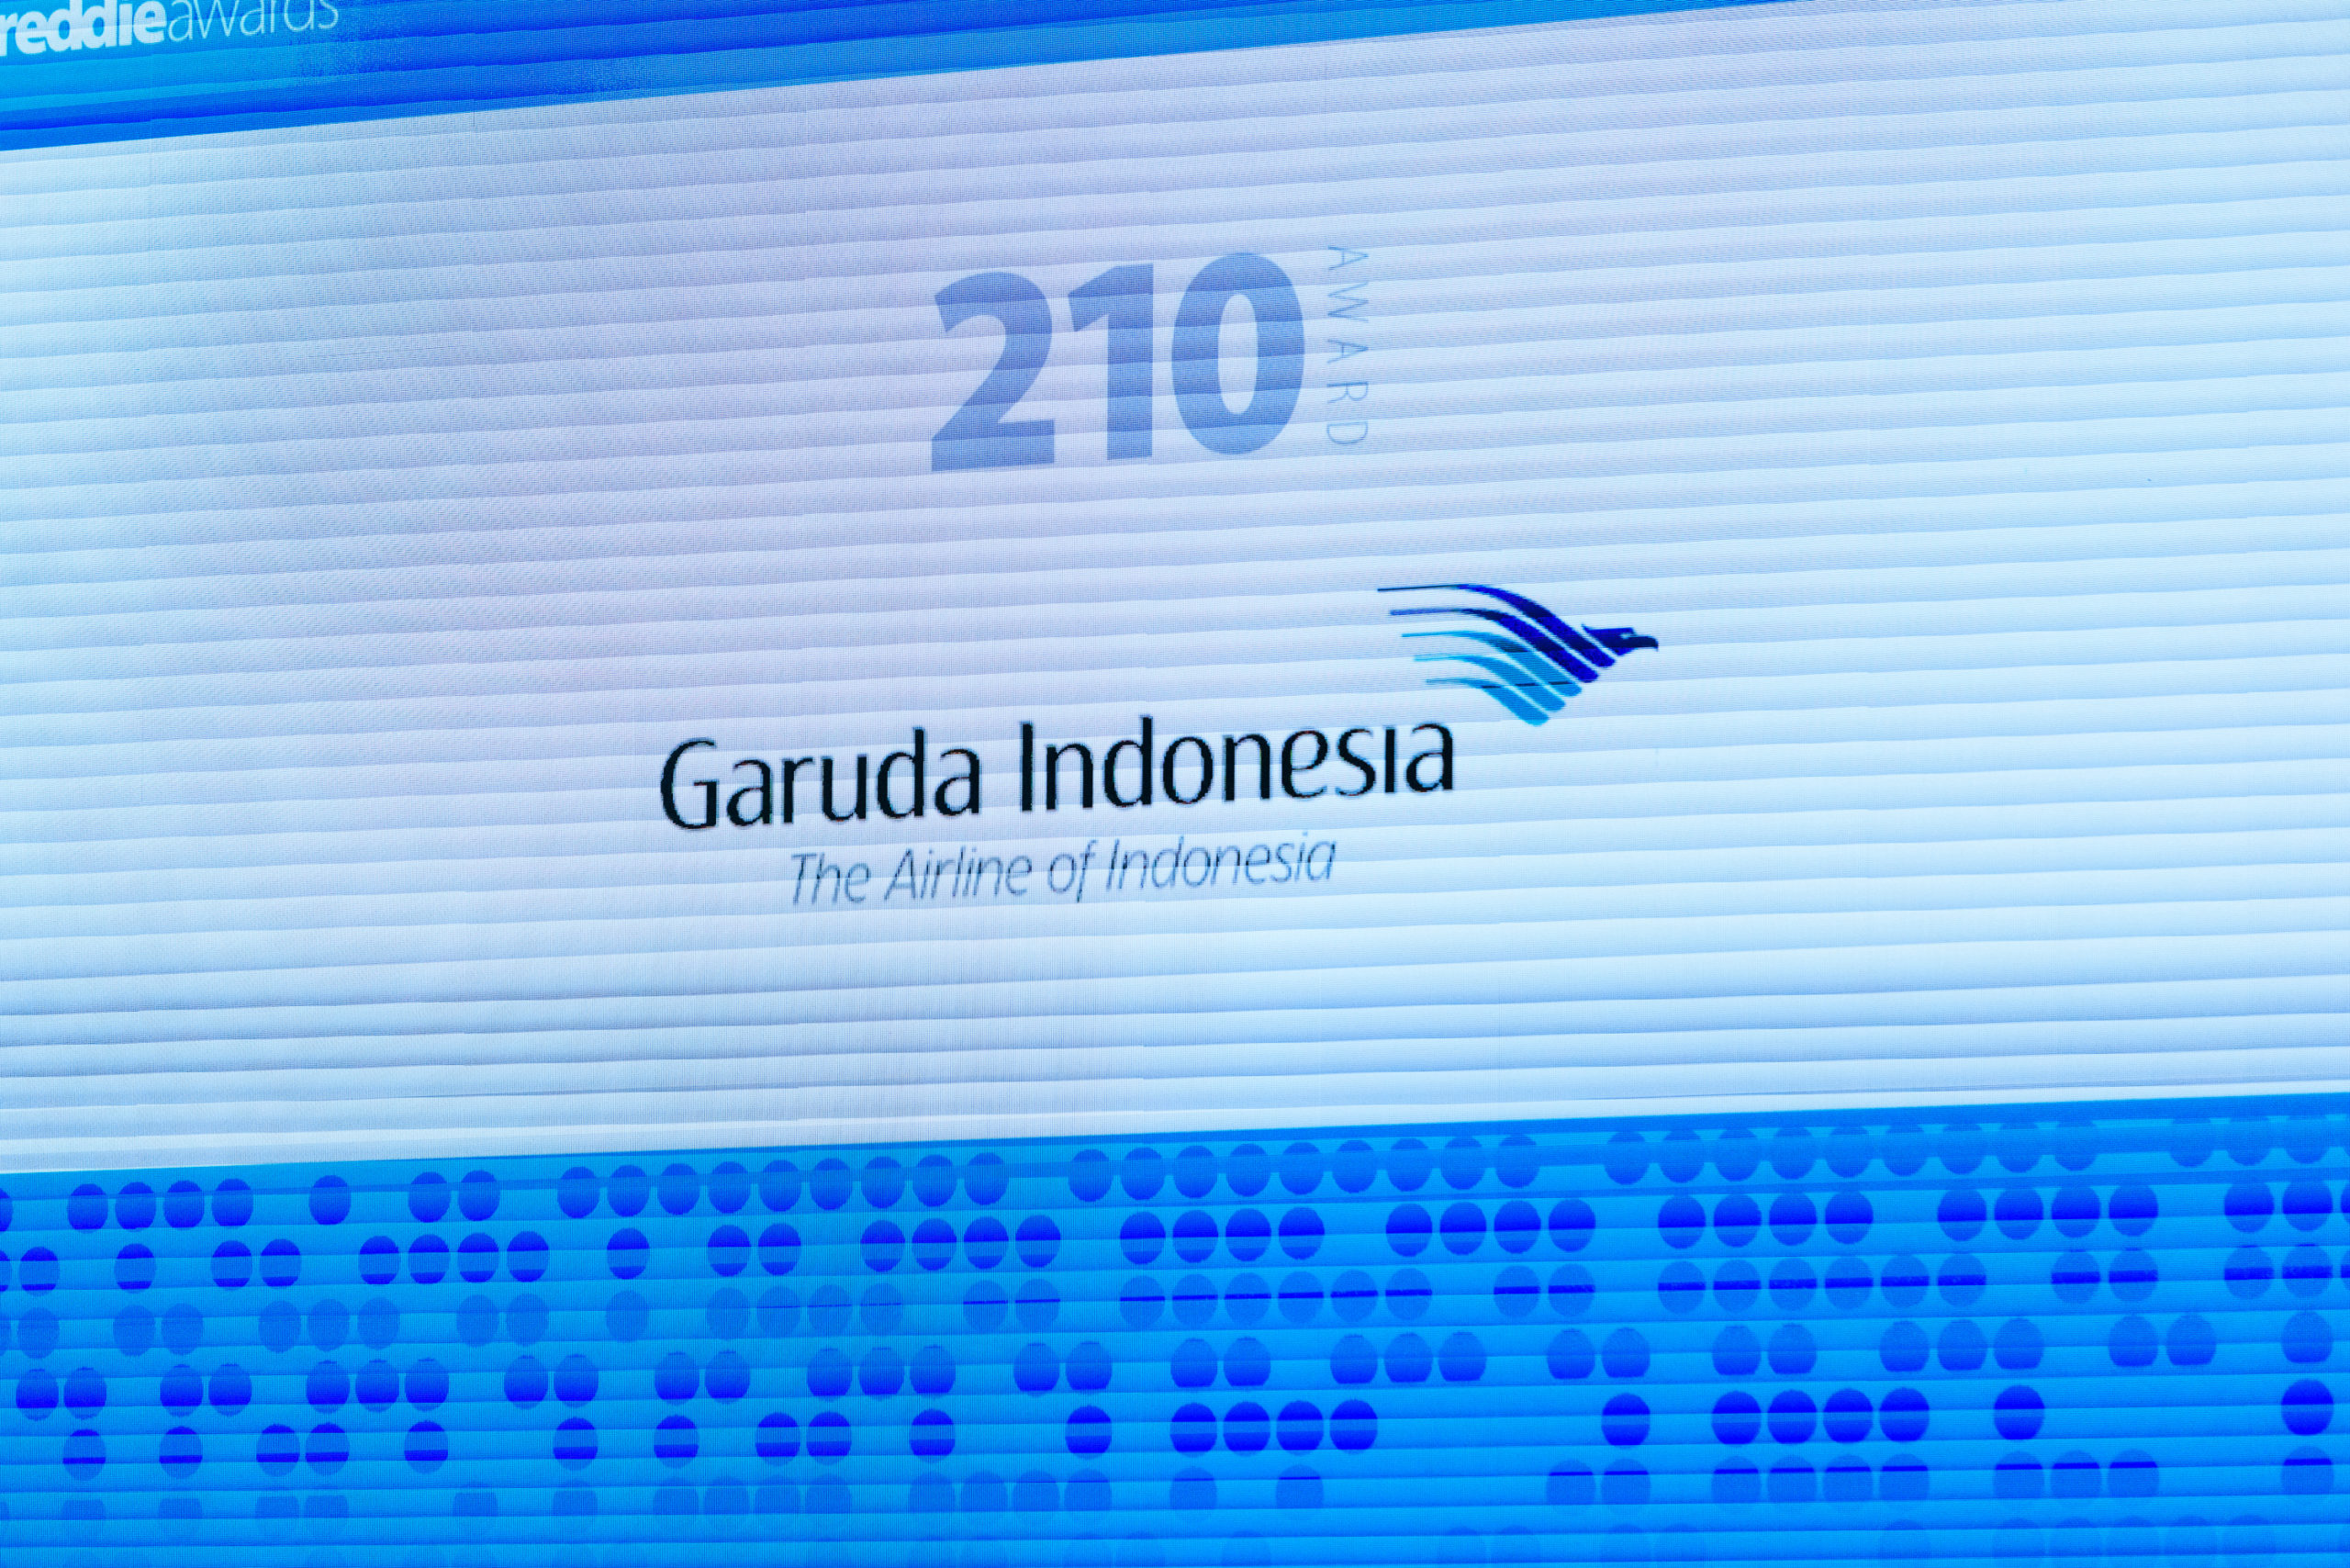 Garuda Indonesia 210 Award